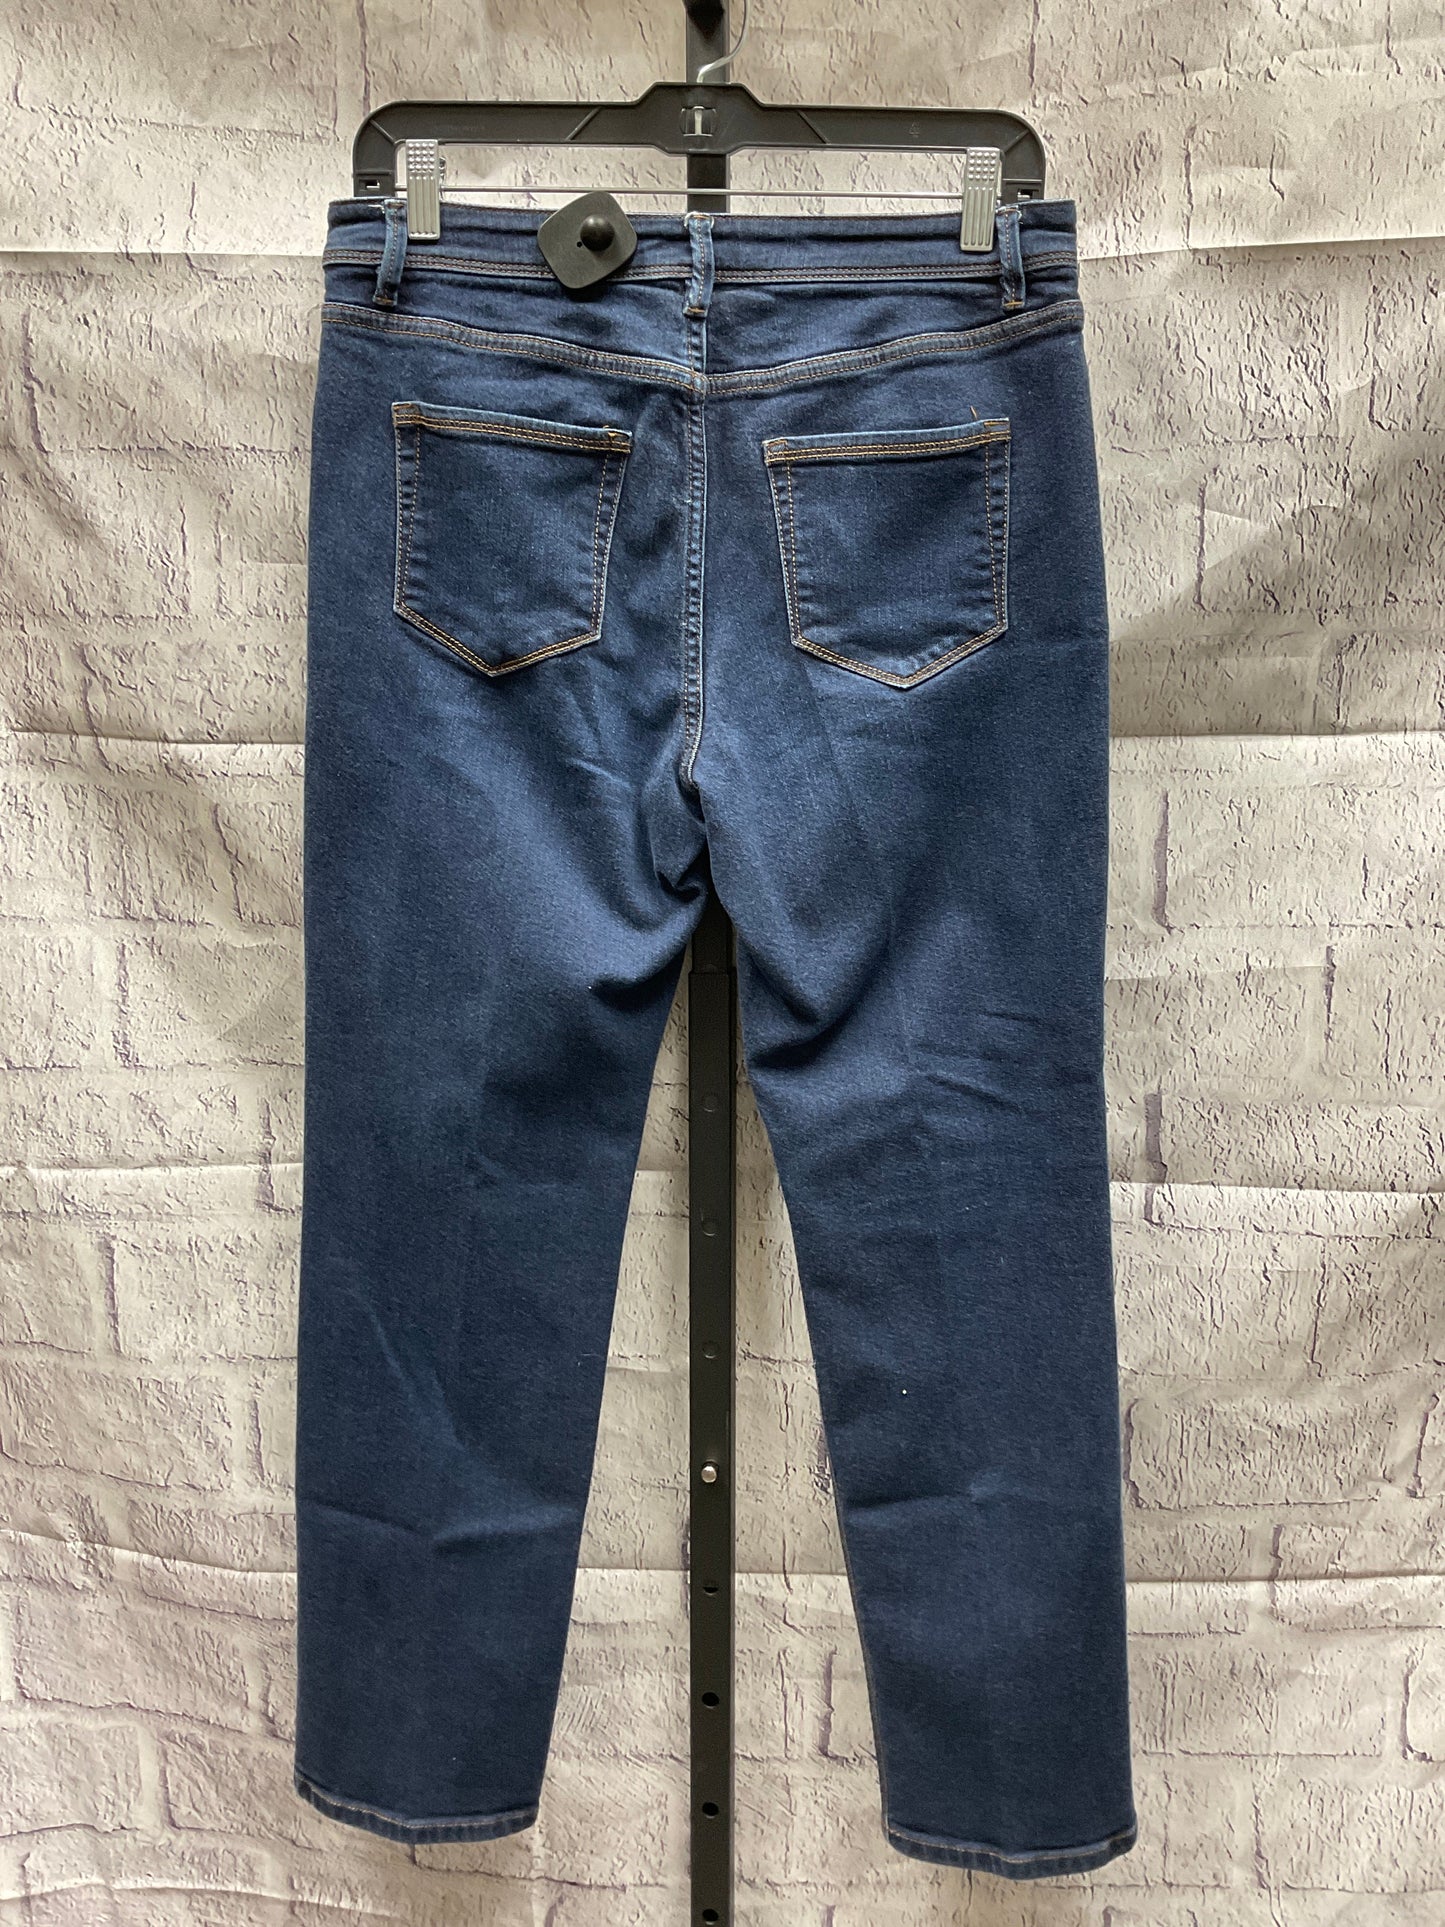 Jeans Straight By J Jill  Size: 8petite